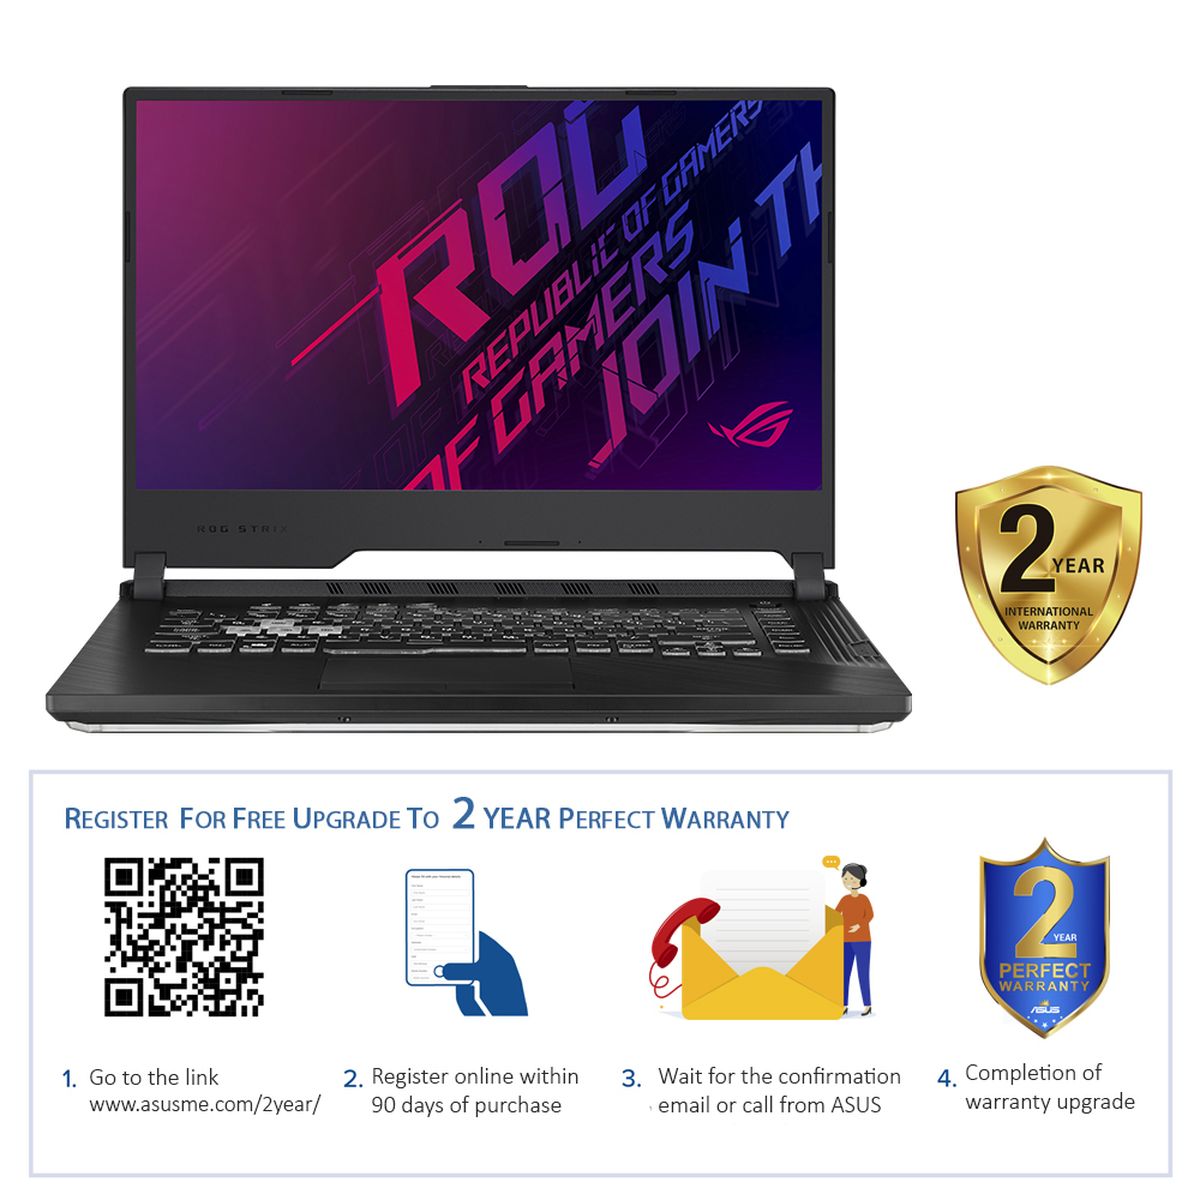 ASUS ROG STRIX G G531GU-AL237T Gaming Laptop G i7-9750H/16GB/1TB HDD+256GB SSD/NVIDIA GeForce GTX 1660 Ti 6GB/15.6 inch FHD/120Hz/Windows 10